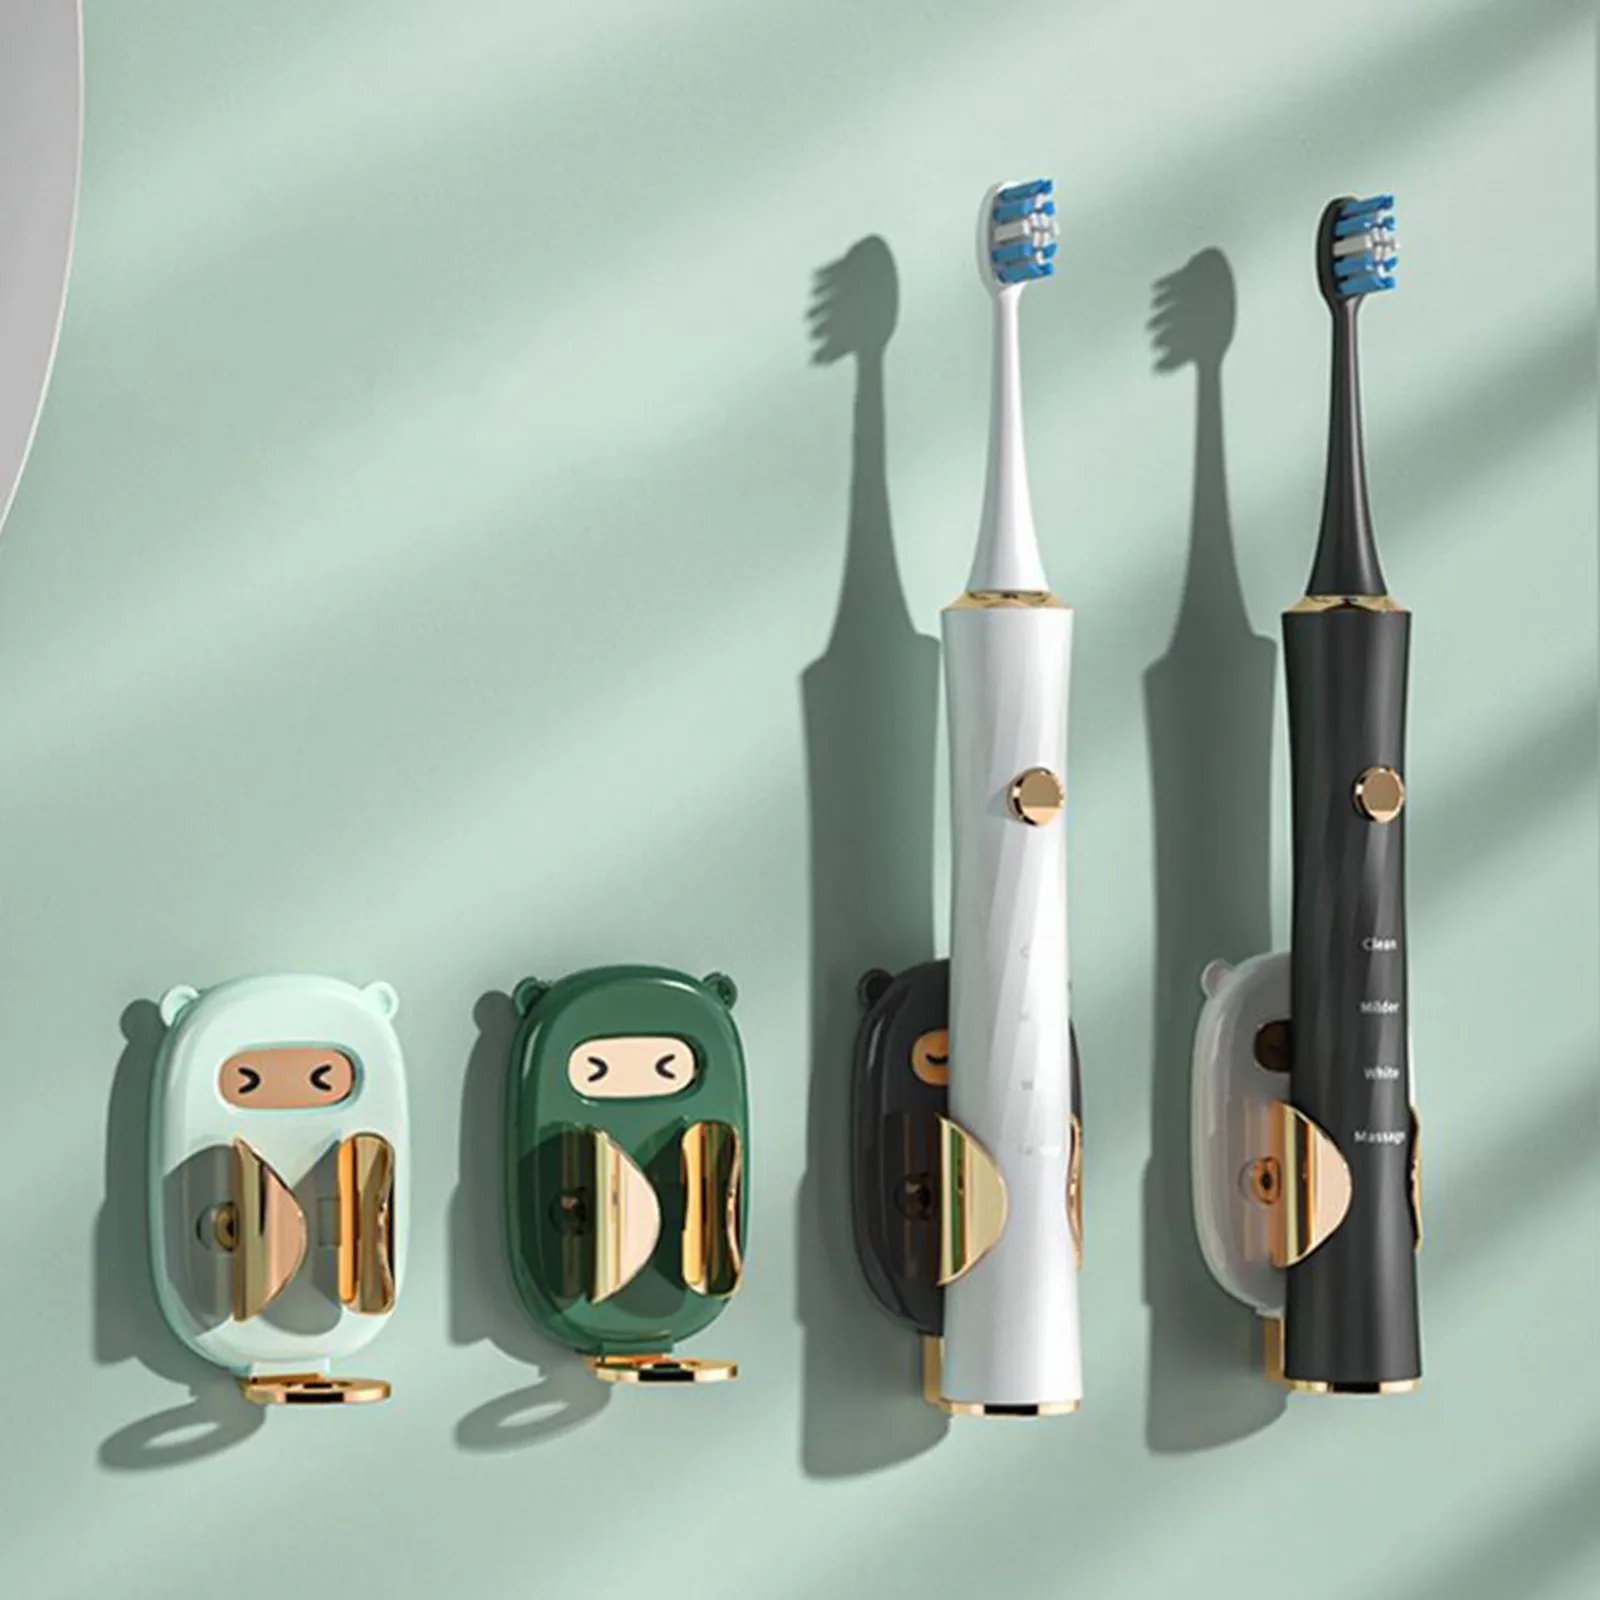 Gravity Sensor Electric Toothbrush Holder Wall Mounted Toothbrush Drain Rack Bathroom Accessories Organizer Storage Shelf